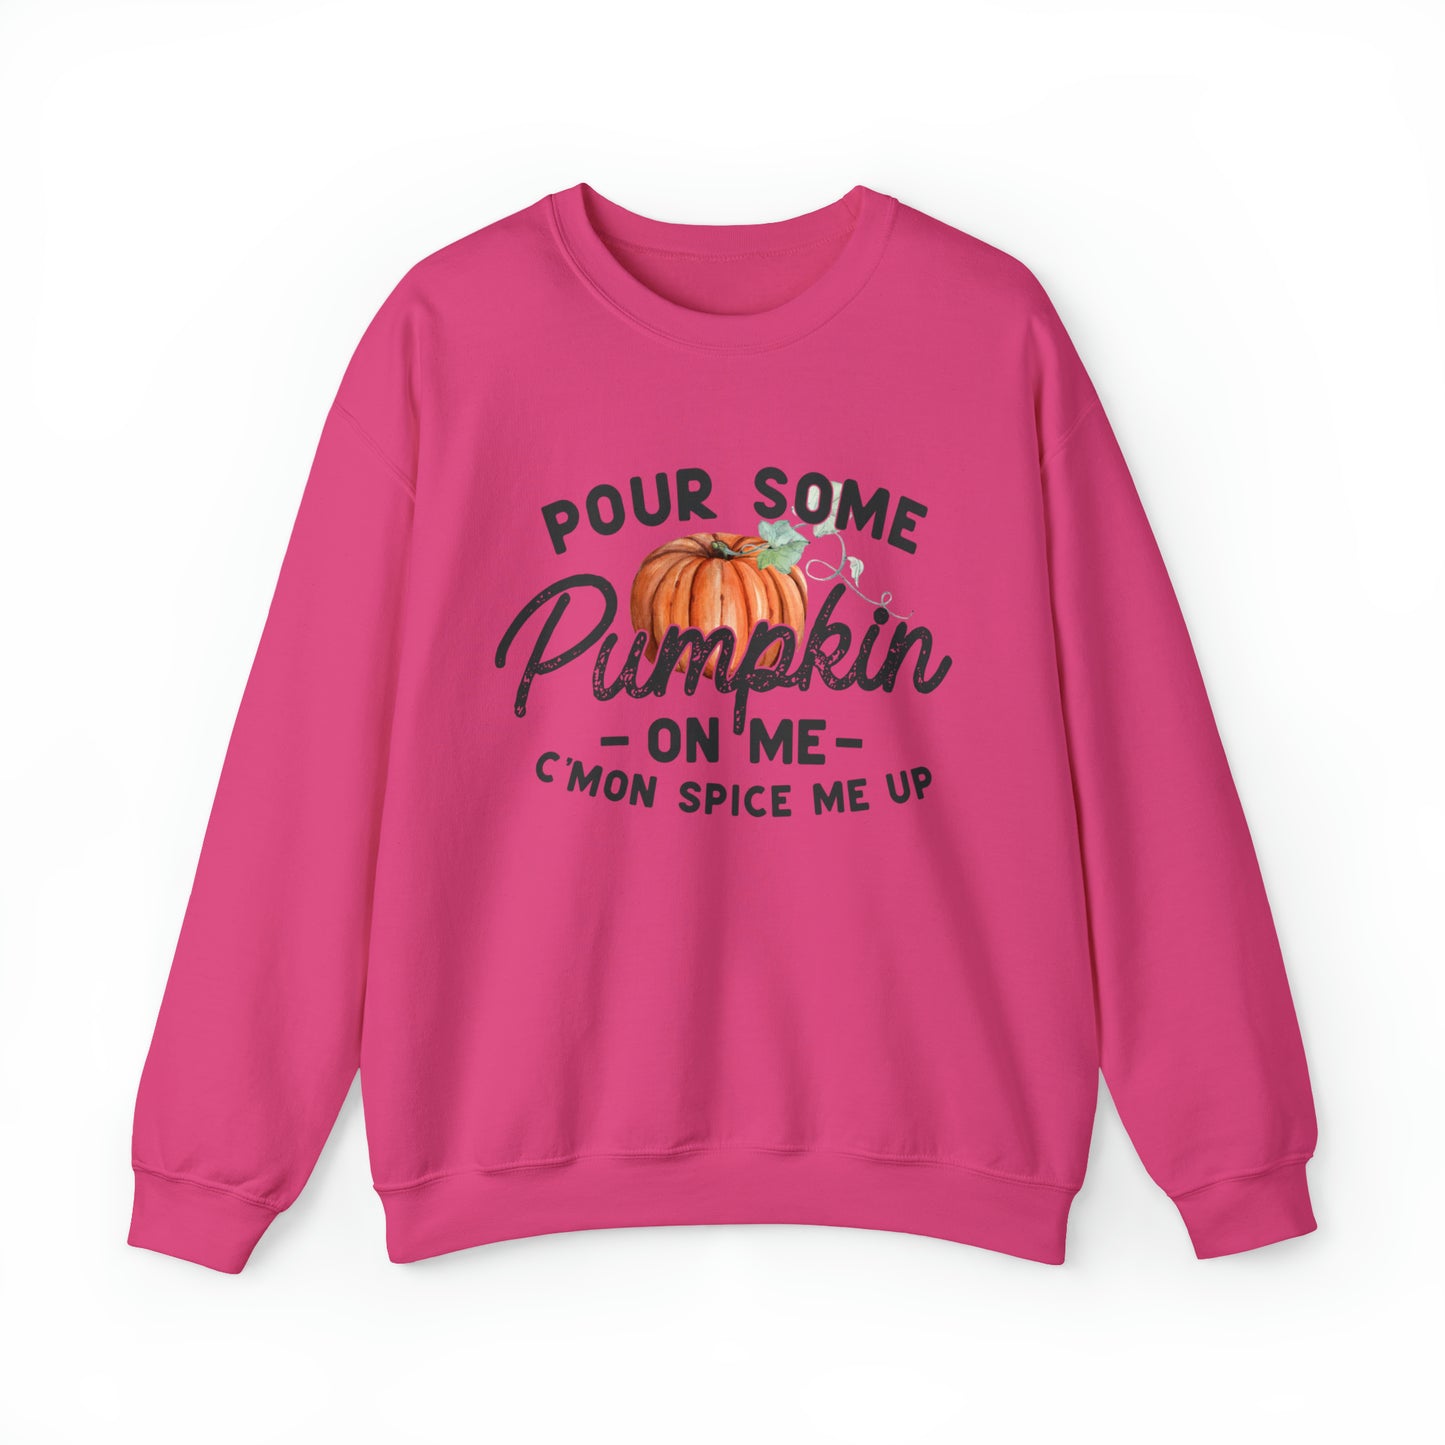 Pour Some Pumpkin on Me Crewneck Sweatshirt